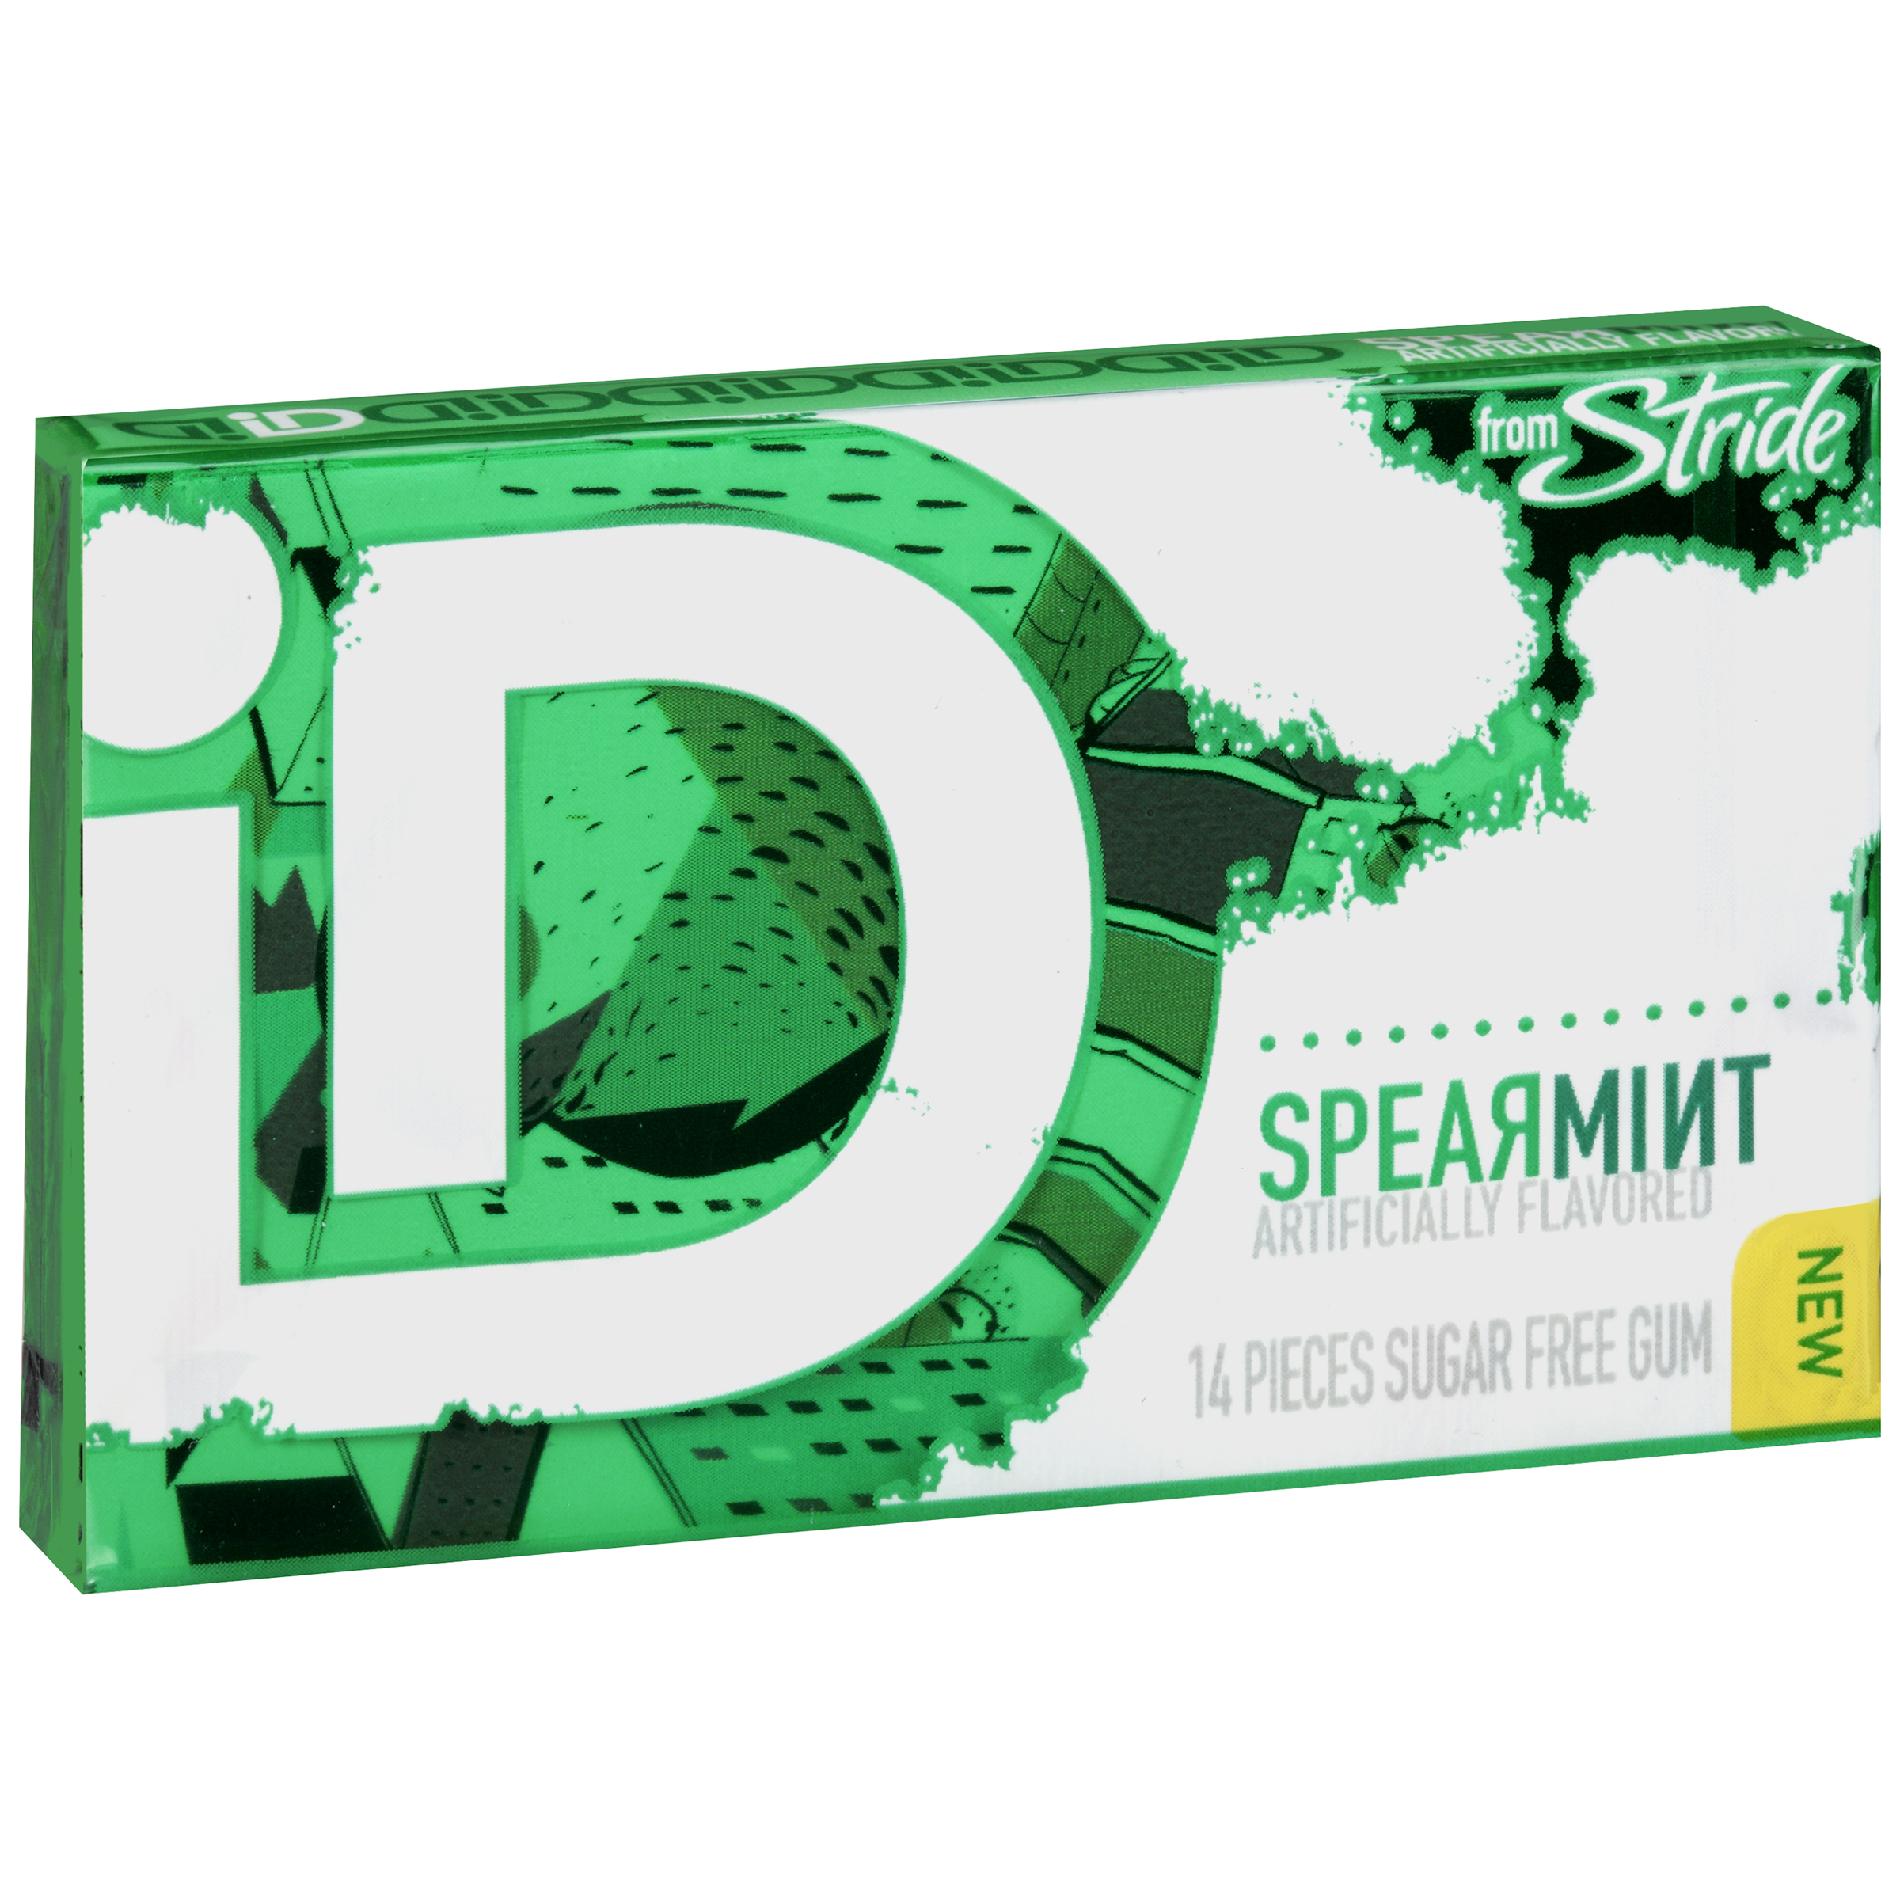 Kraft Sugar Free Gum, Spearmint 14 Pieces, 1 pk